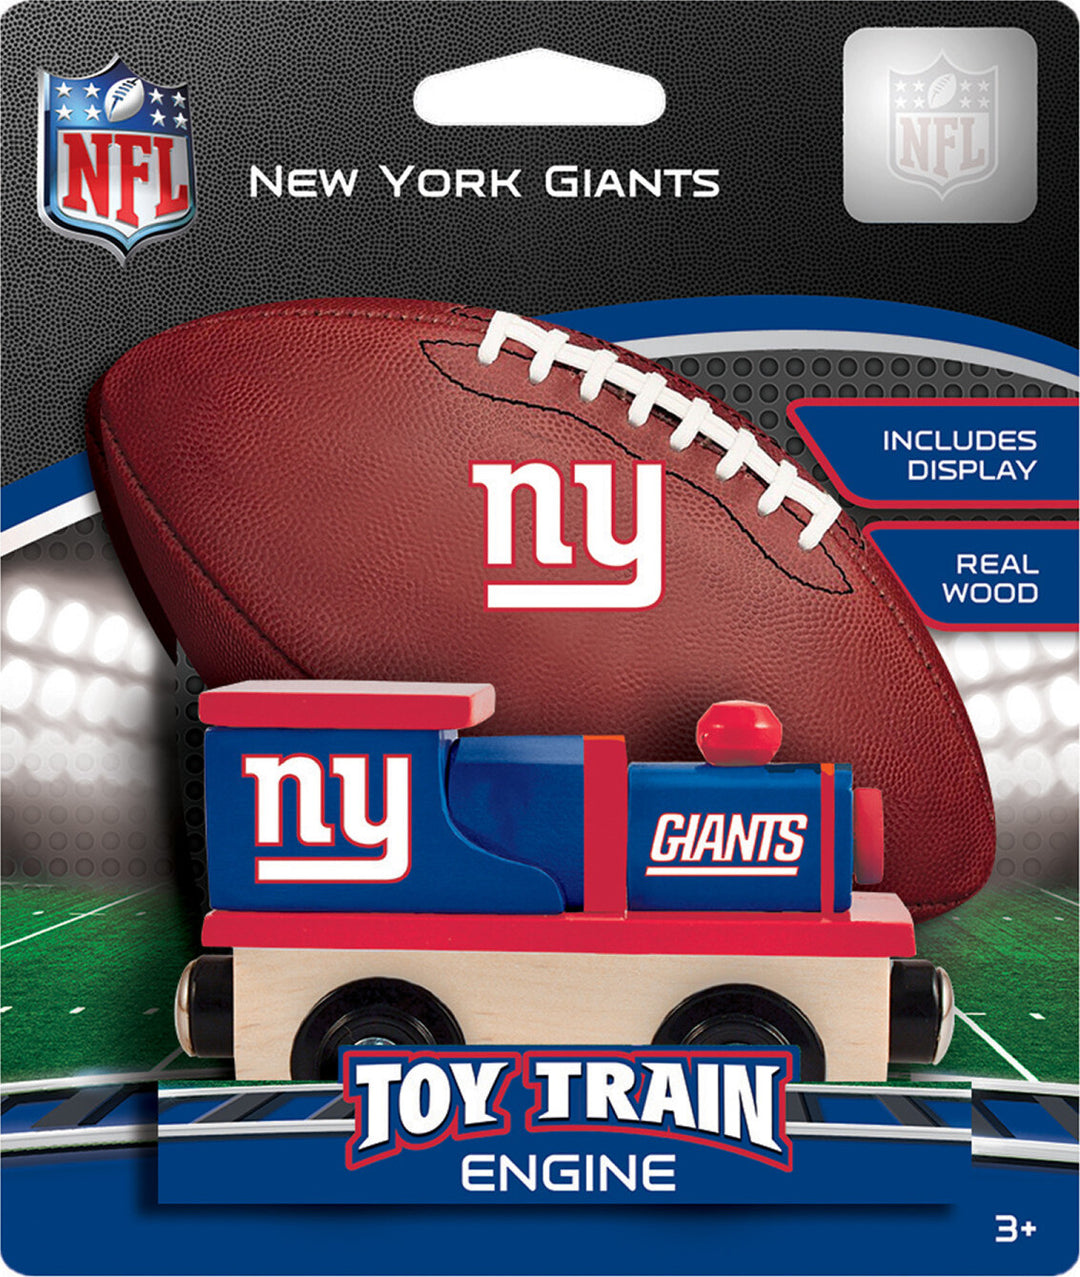 New York Giants NFL Wood Train Engine